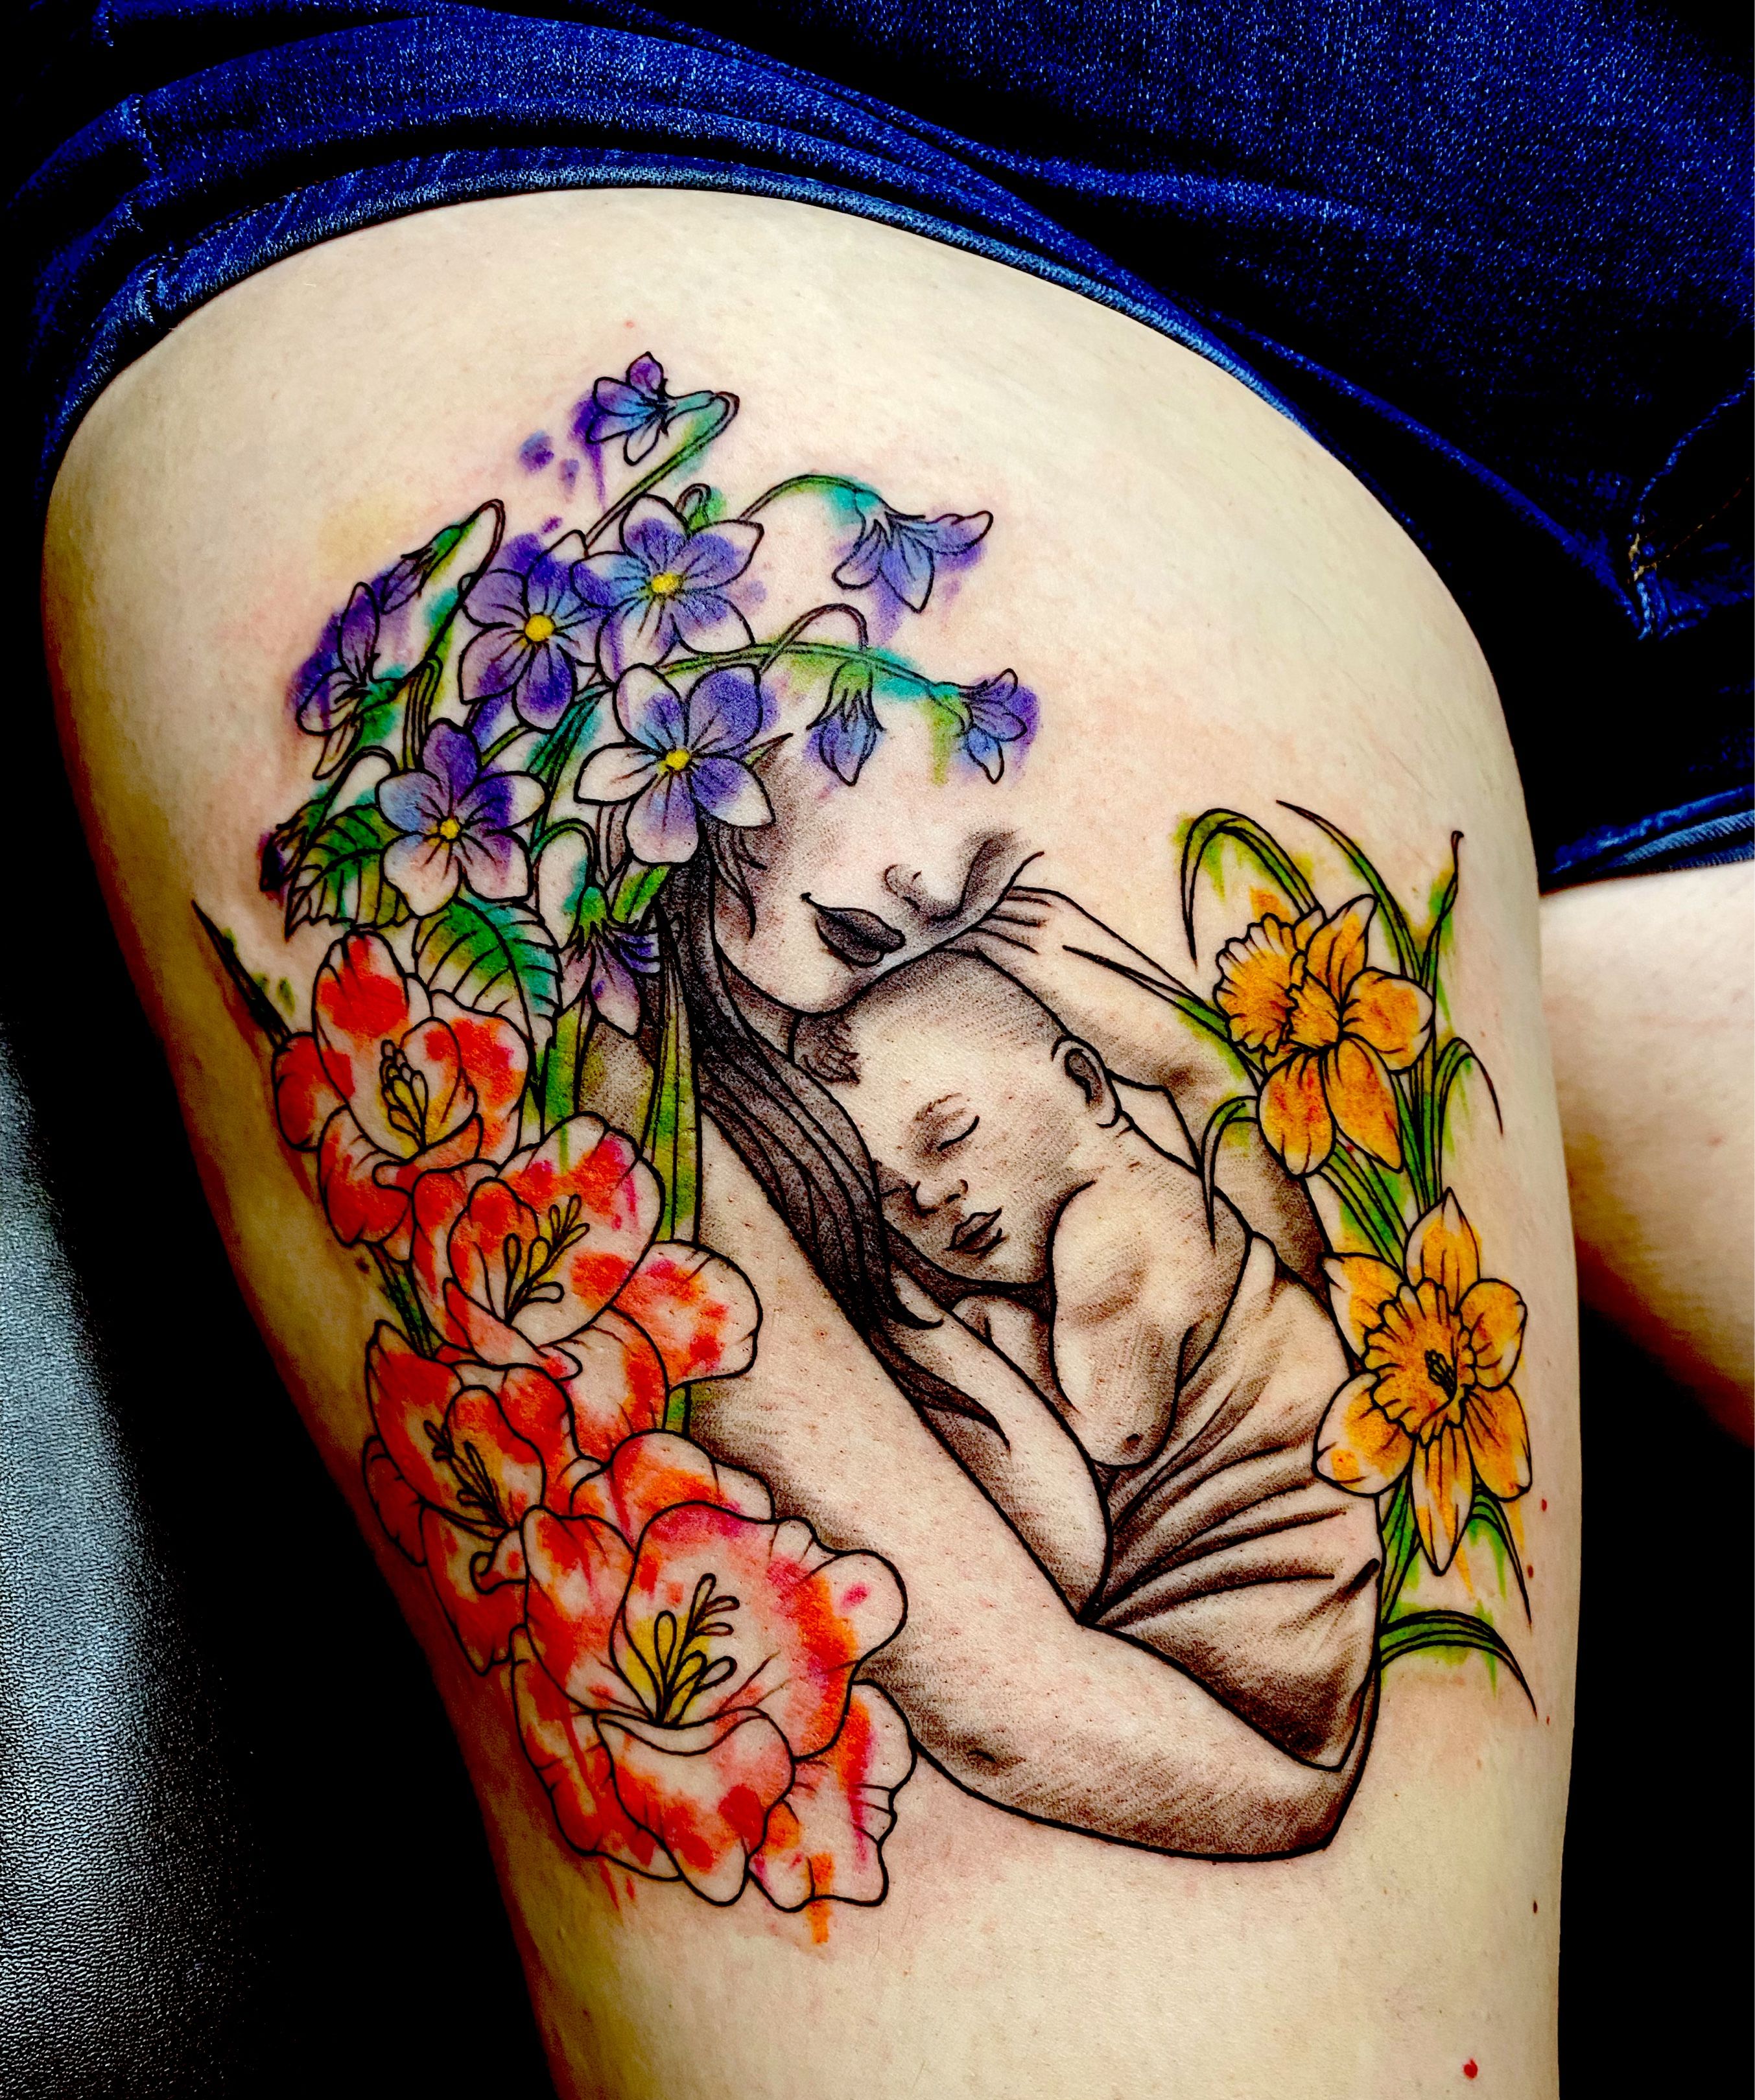 Vanity Tattoo - Loved doing this motherhood tattoo today!... | Facebook